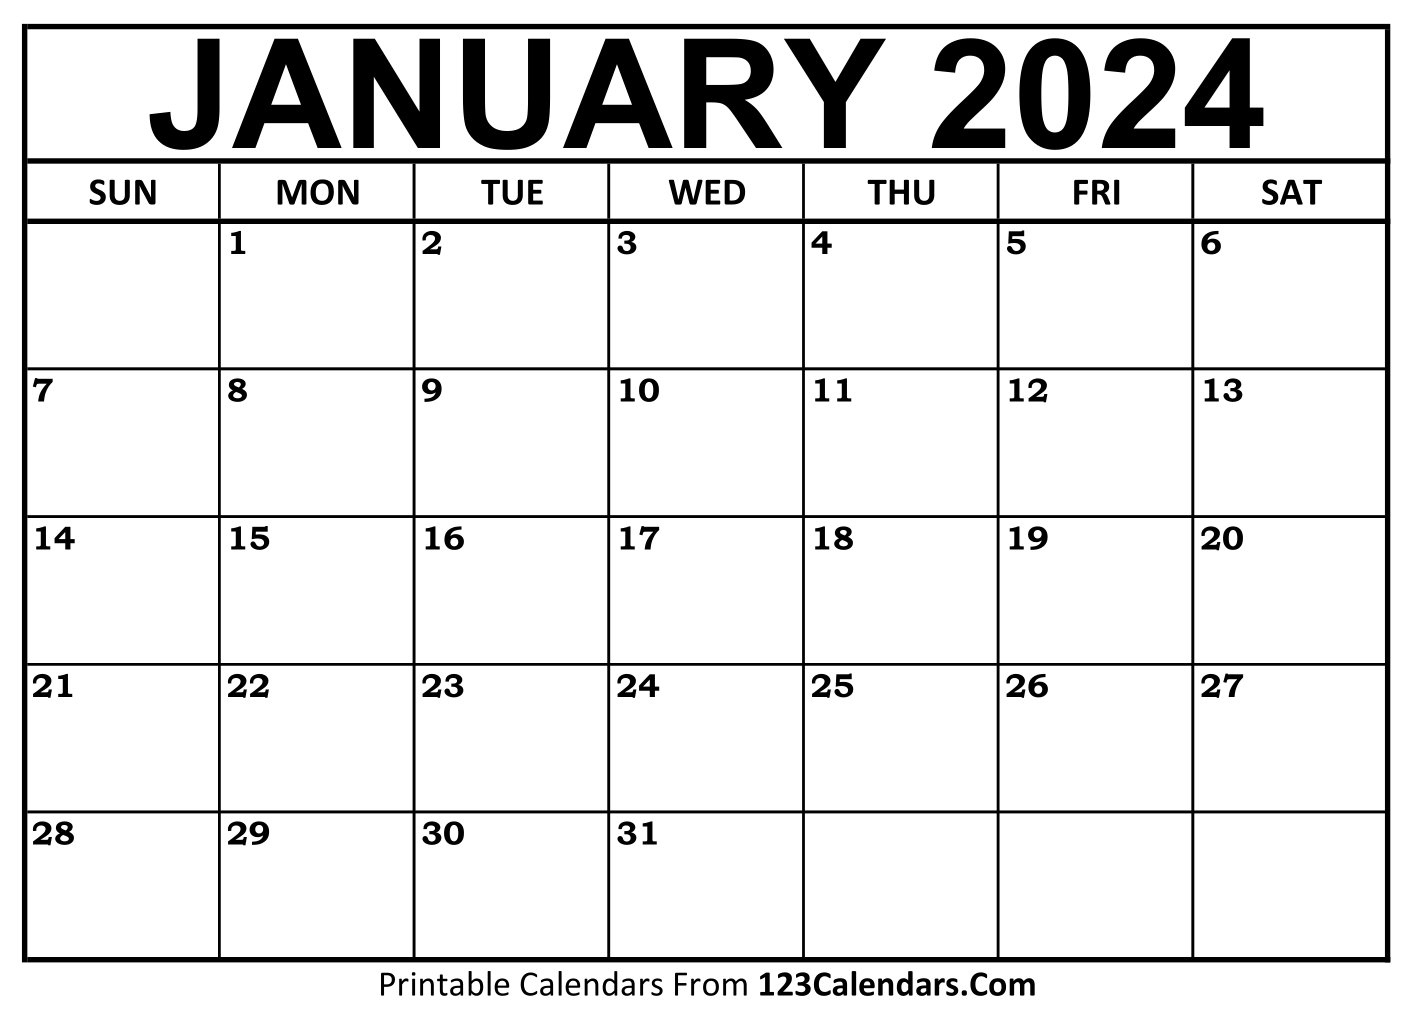 Printable January 2024 Calendar Templates - 123Calendars | January 2024 Printable Calendar